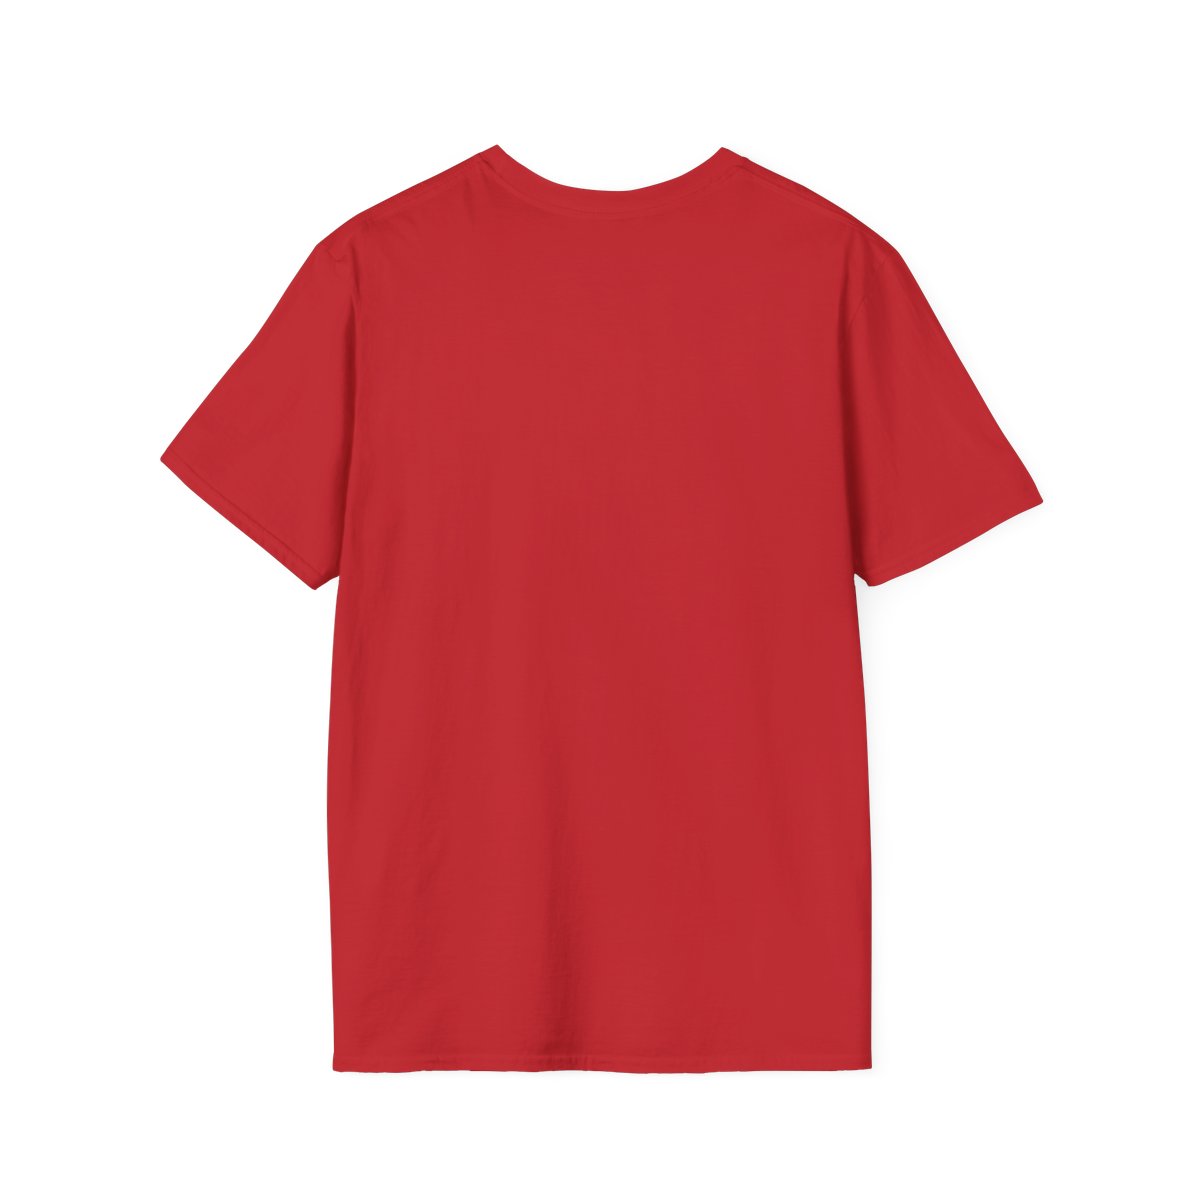 Lake Shift- white, gray, blue or red T-shirt product thumbnail image